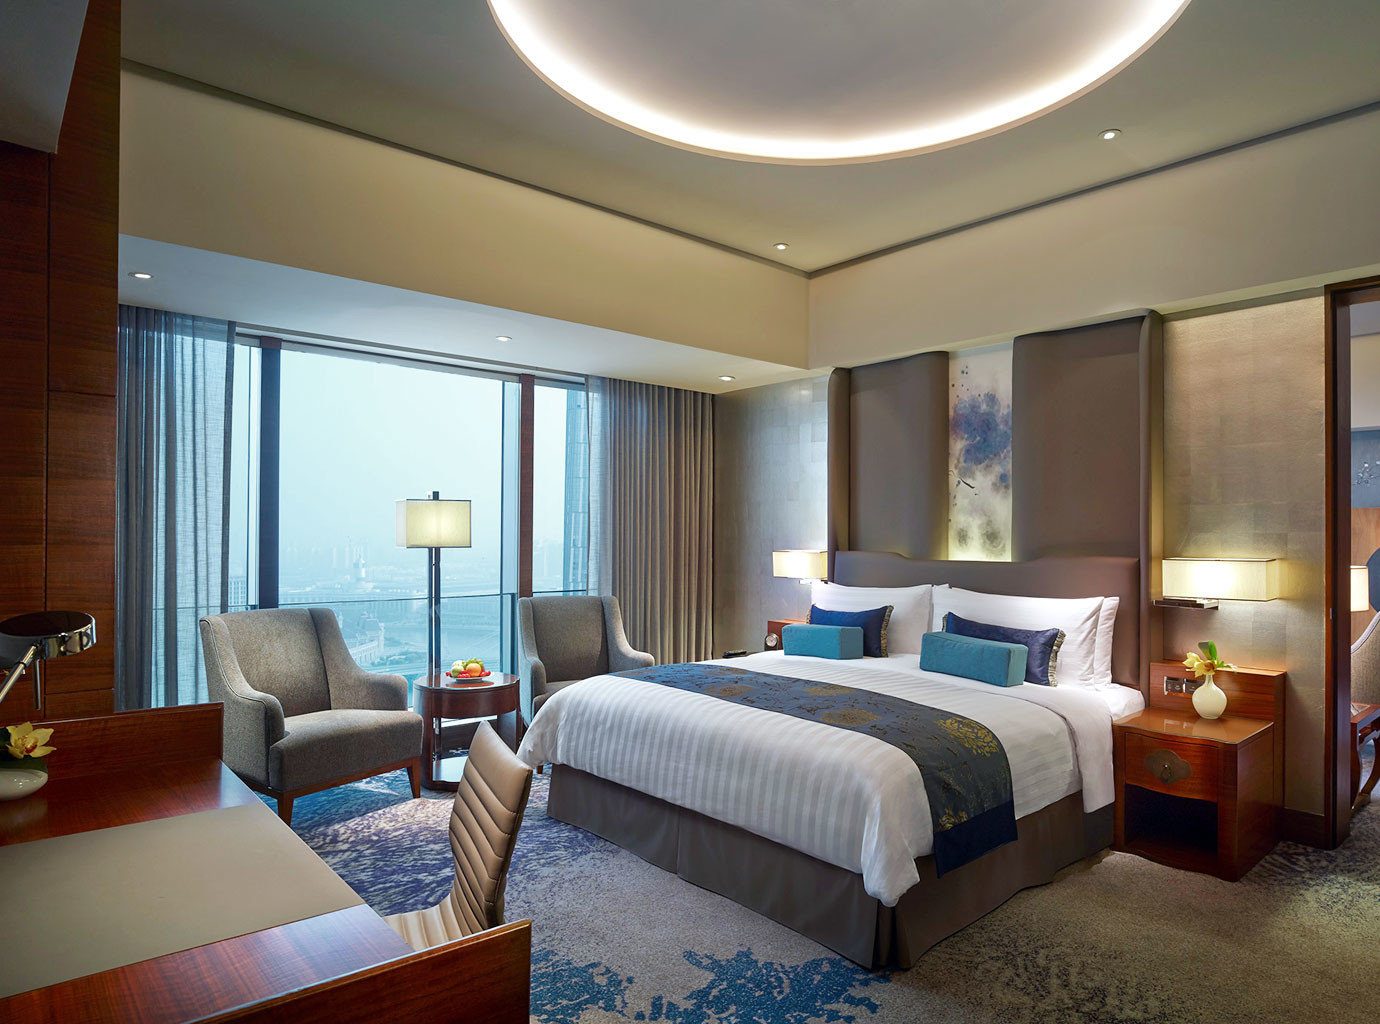 Bedroom Luxury Modern Scenic views Suite property Resort Villa condominium cottage